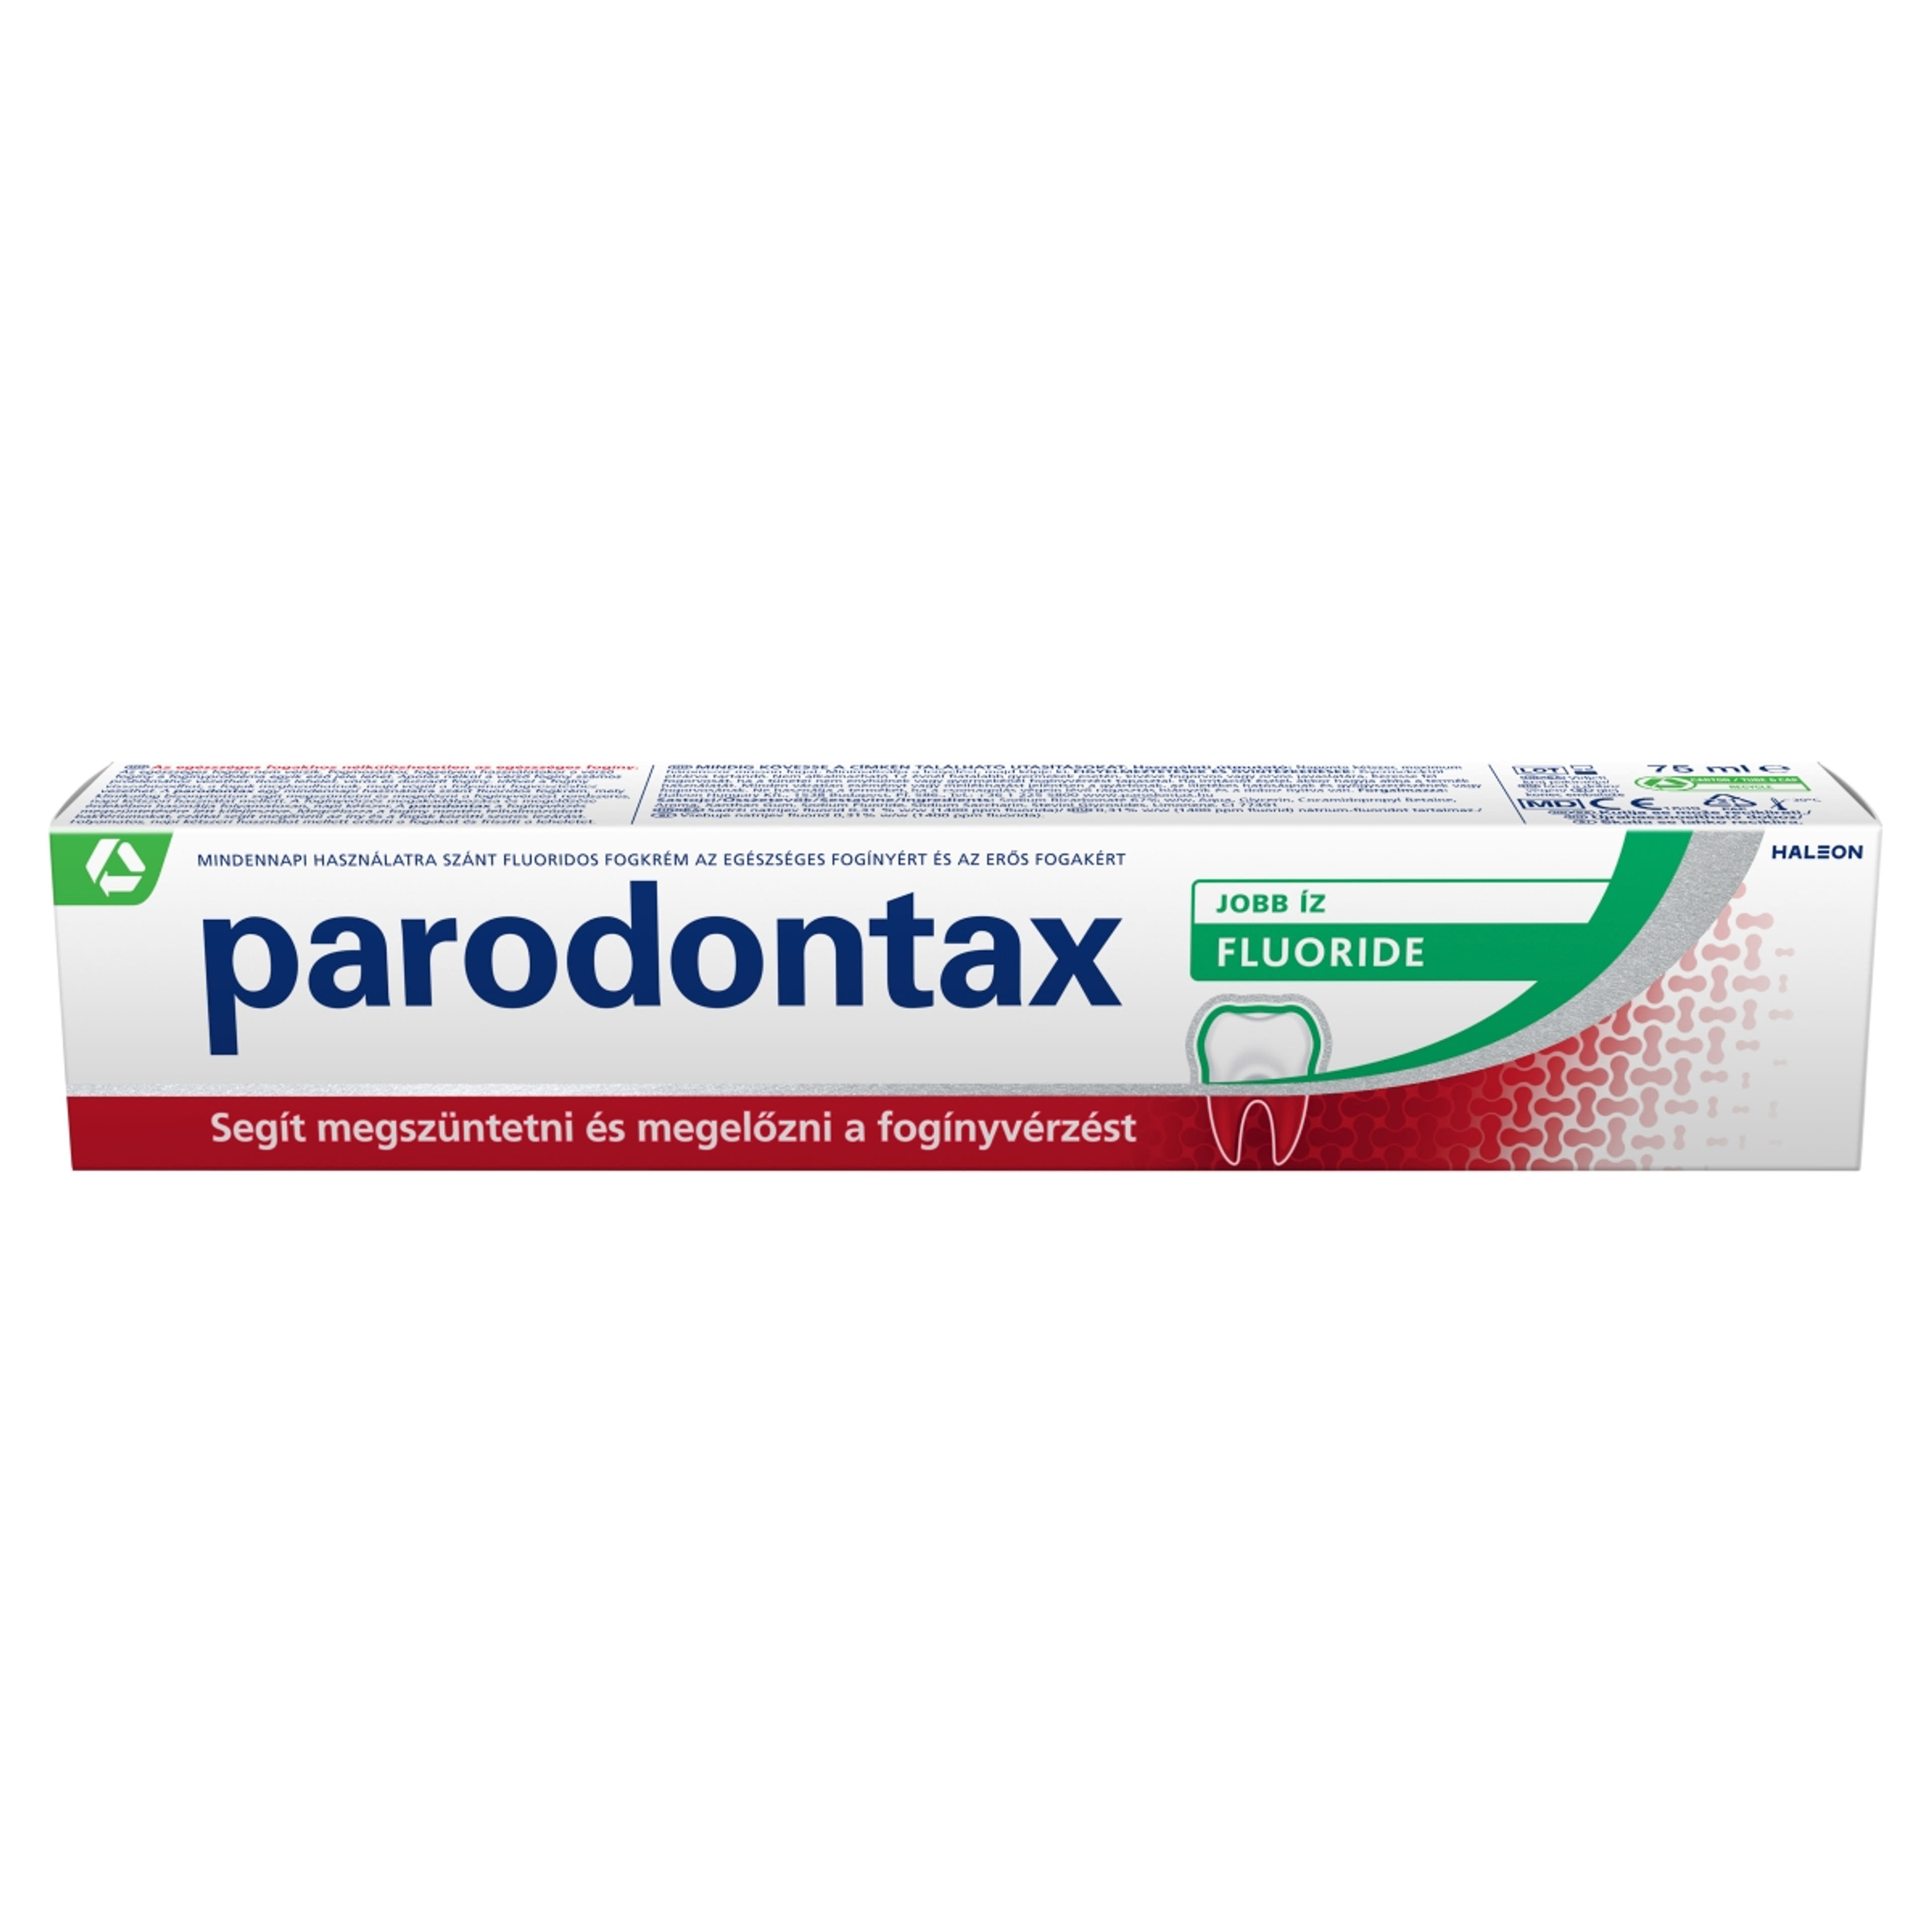 Parodontax Fluoride fogkrém - 75 ml-1